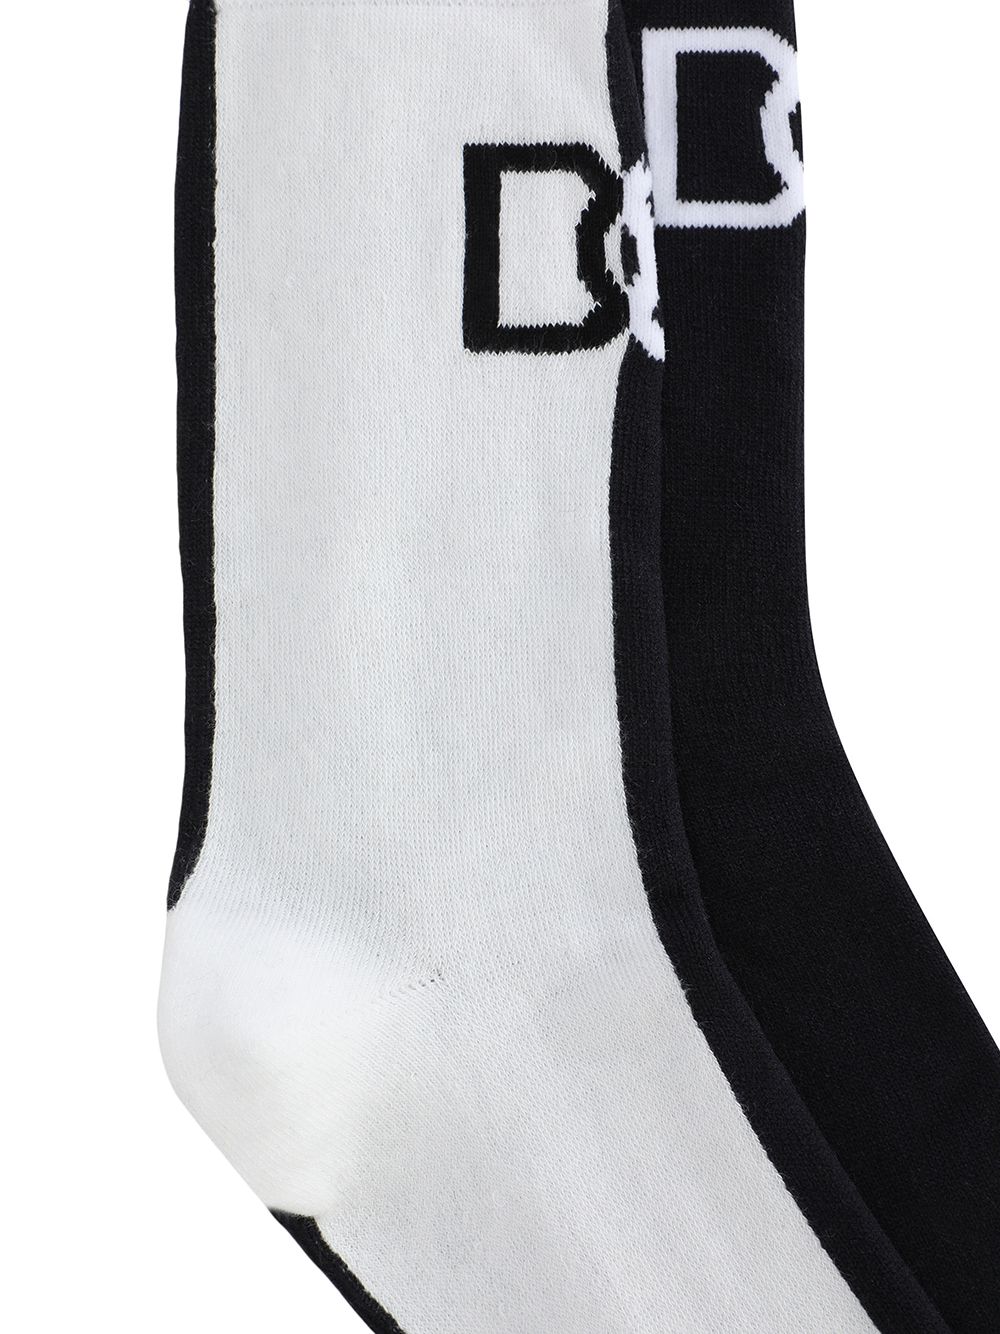 Dolce & Gabbana two-tone Logo Socks - Farfetch